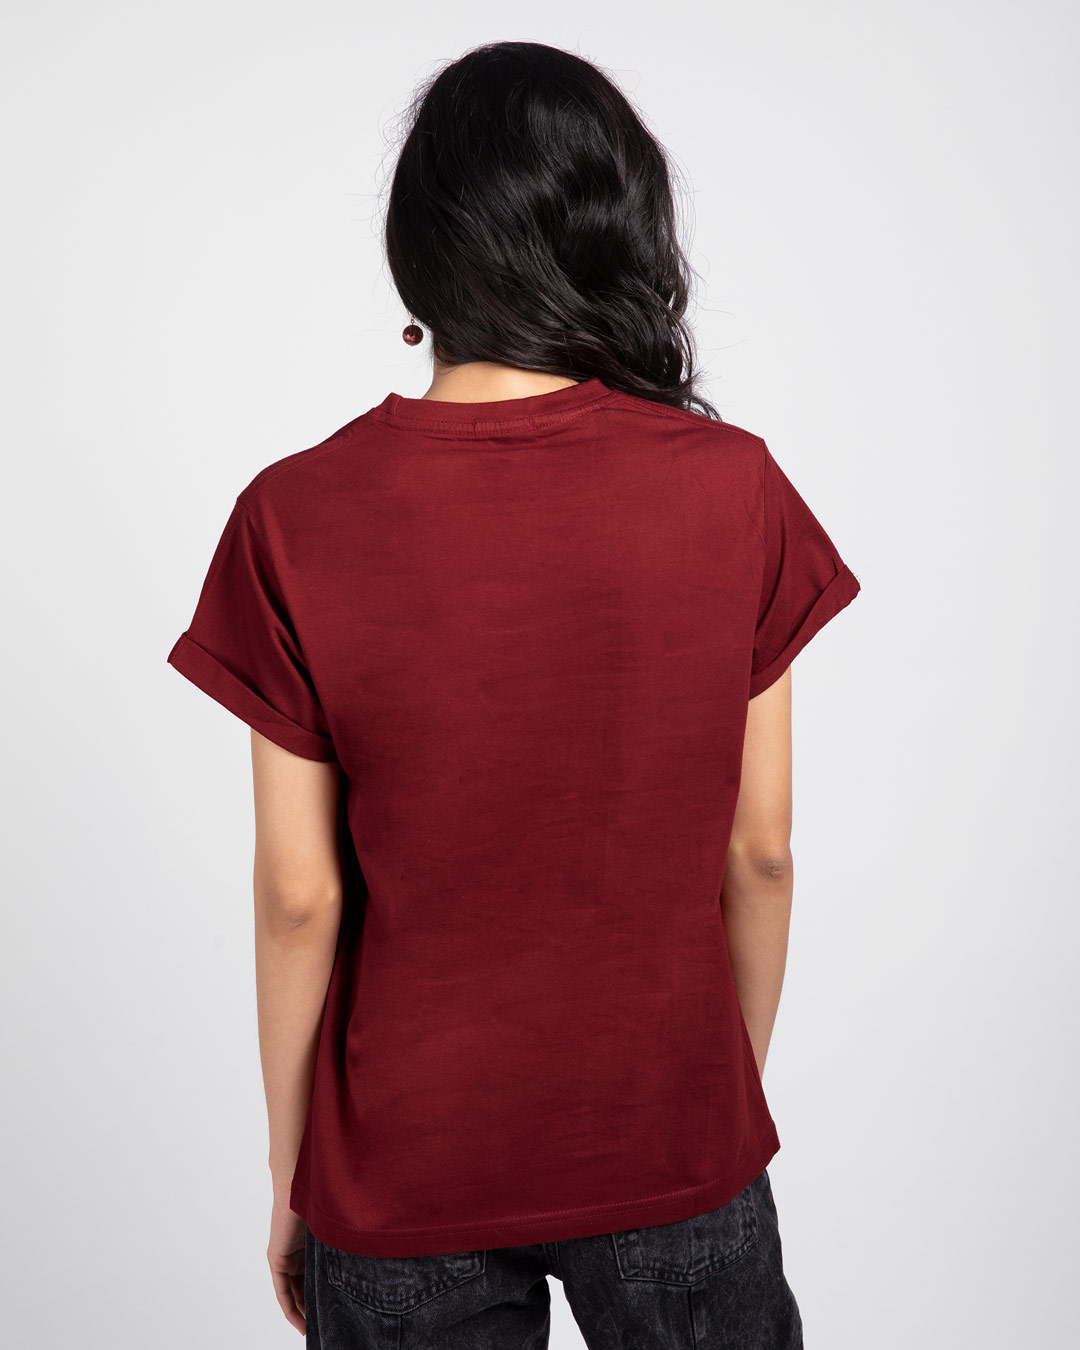 Shop 2020 Scrabble Boyfriend T-Shirt Scarlet Red-Back